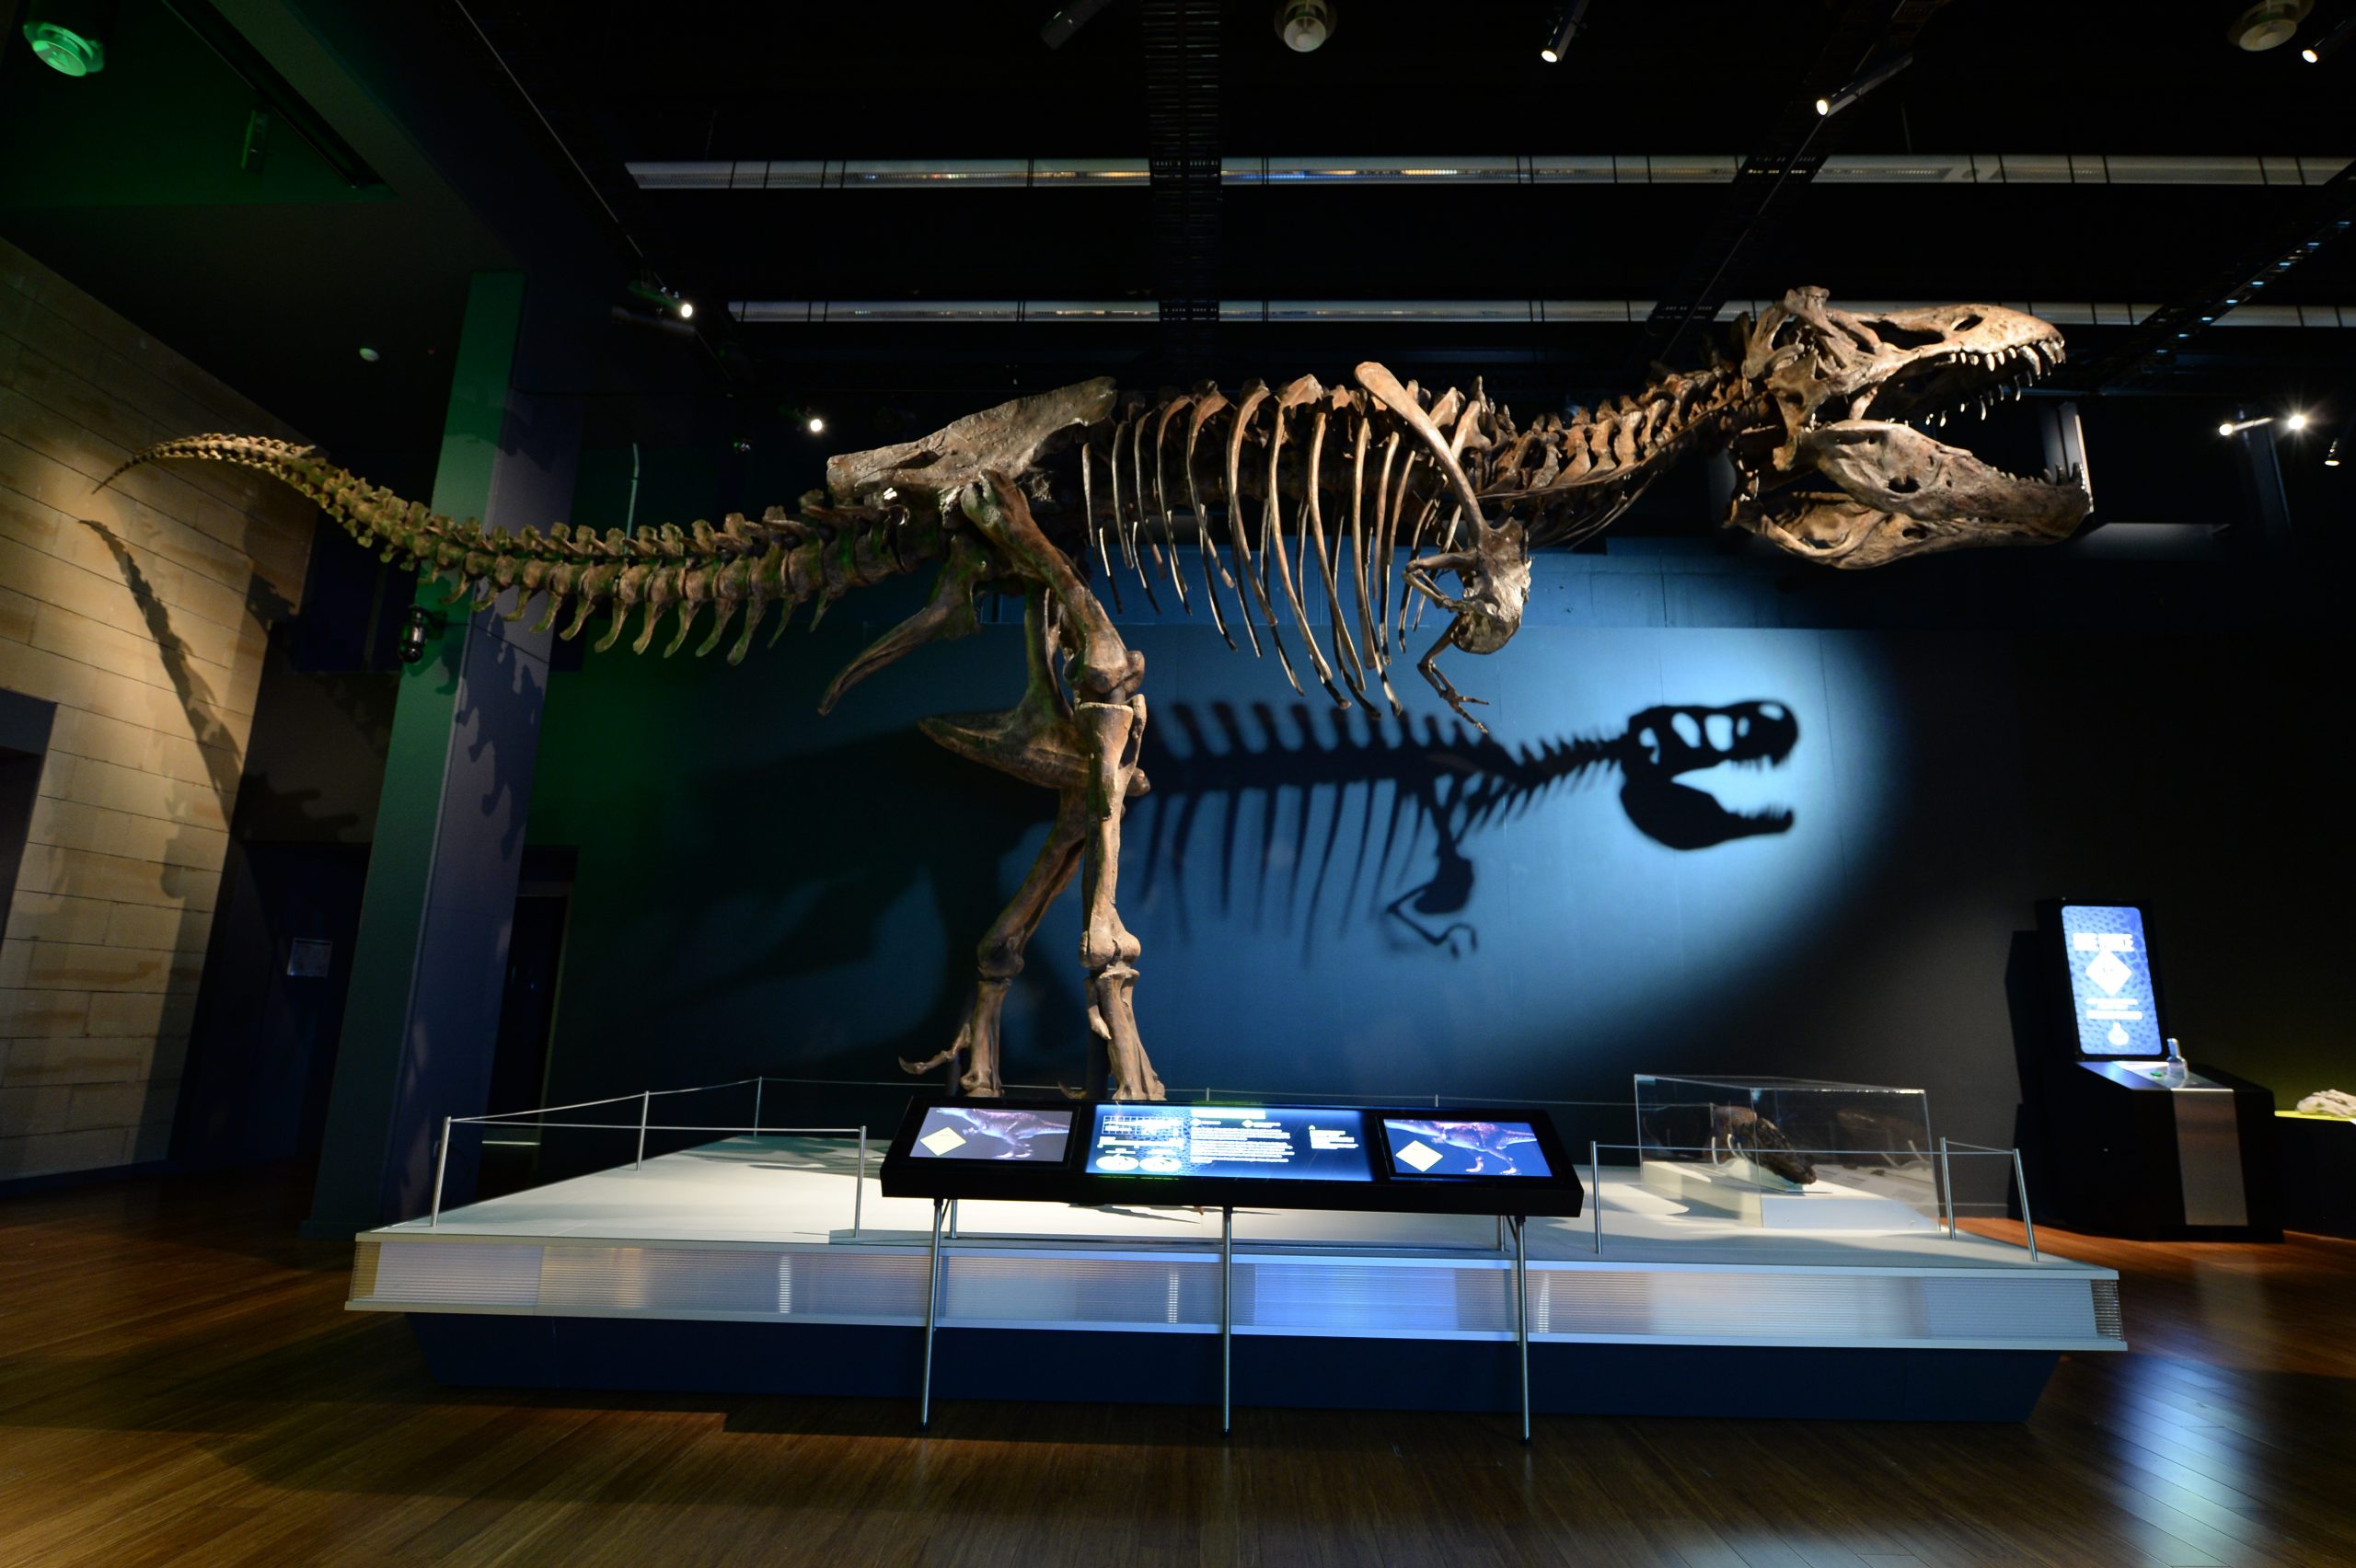 The museum had. Тираннозавр Скотти. Рекс скоти Тираннозавр Скотти. Скотти рекс скелет. Tyrannosaurus Rex Scotty Skeleton.